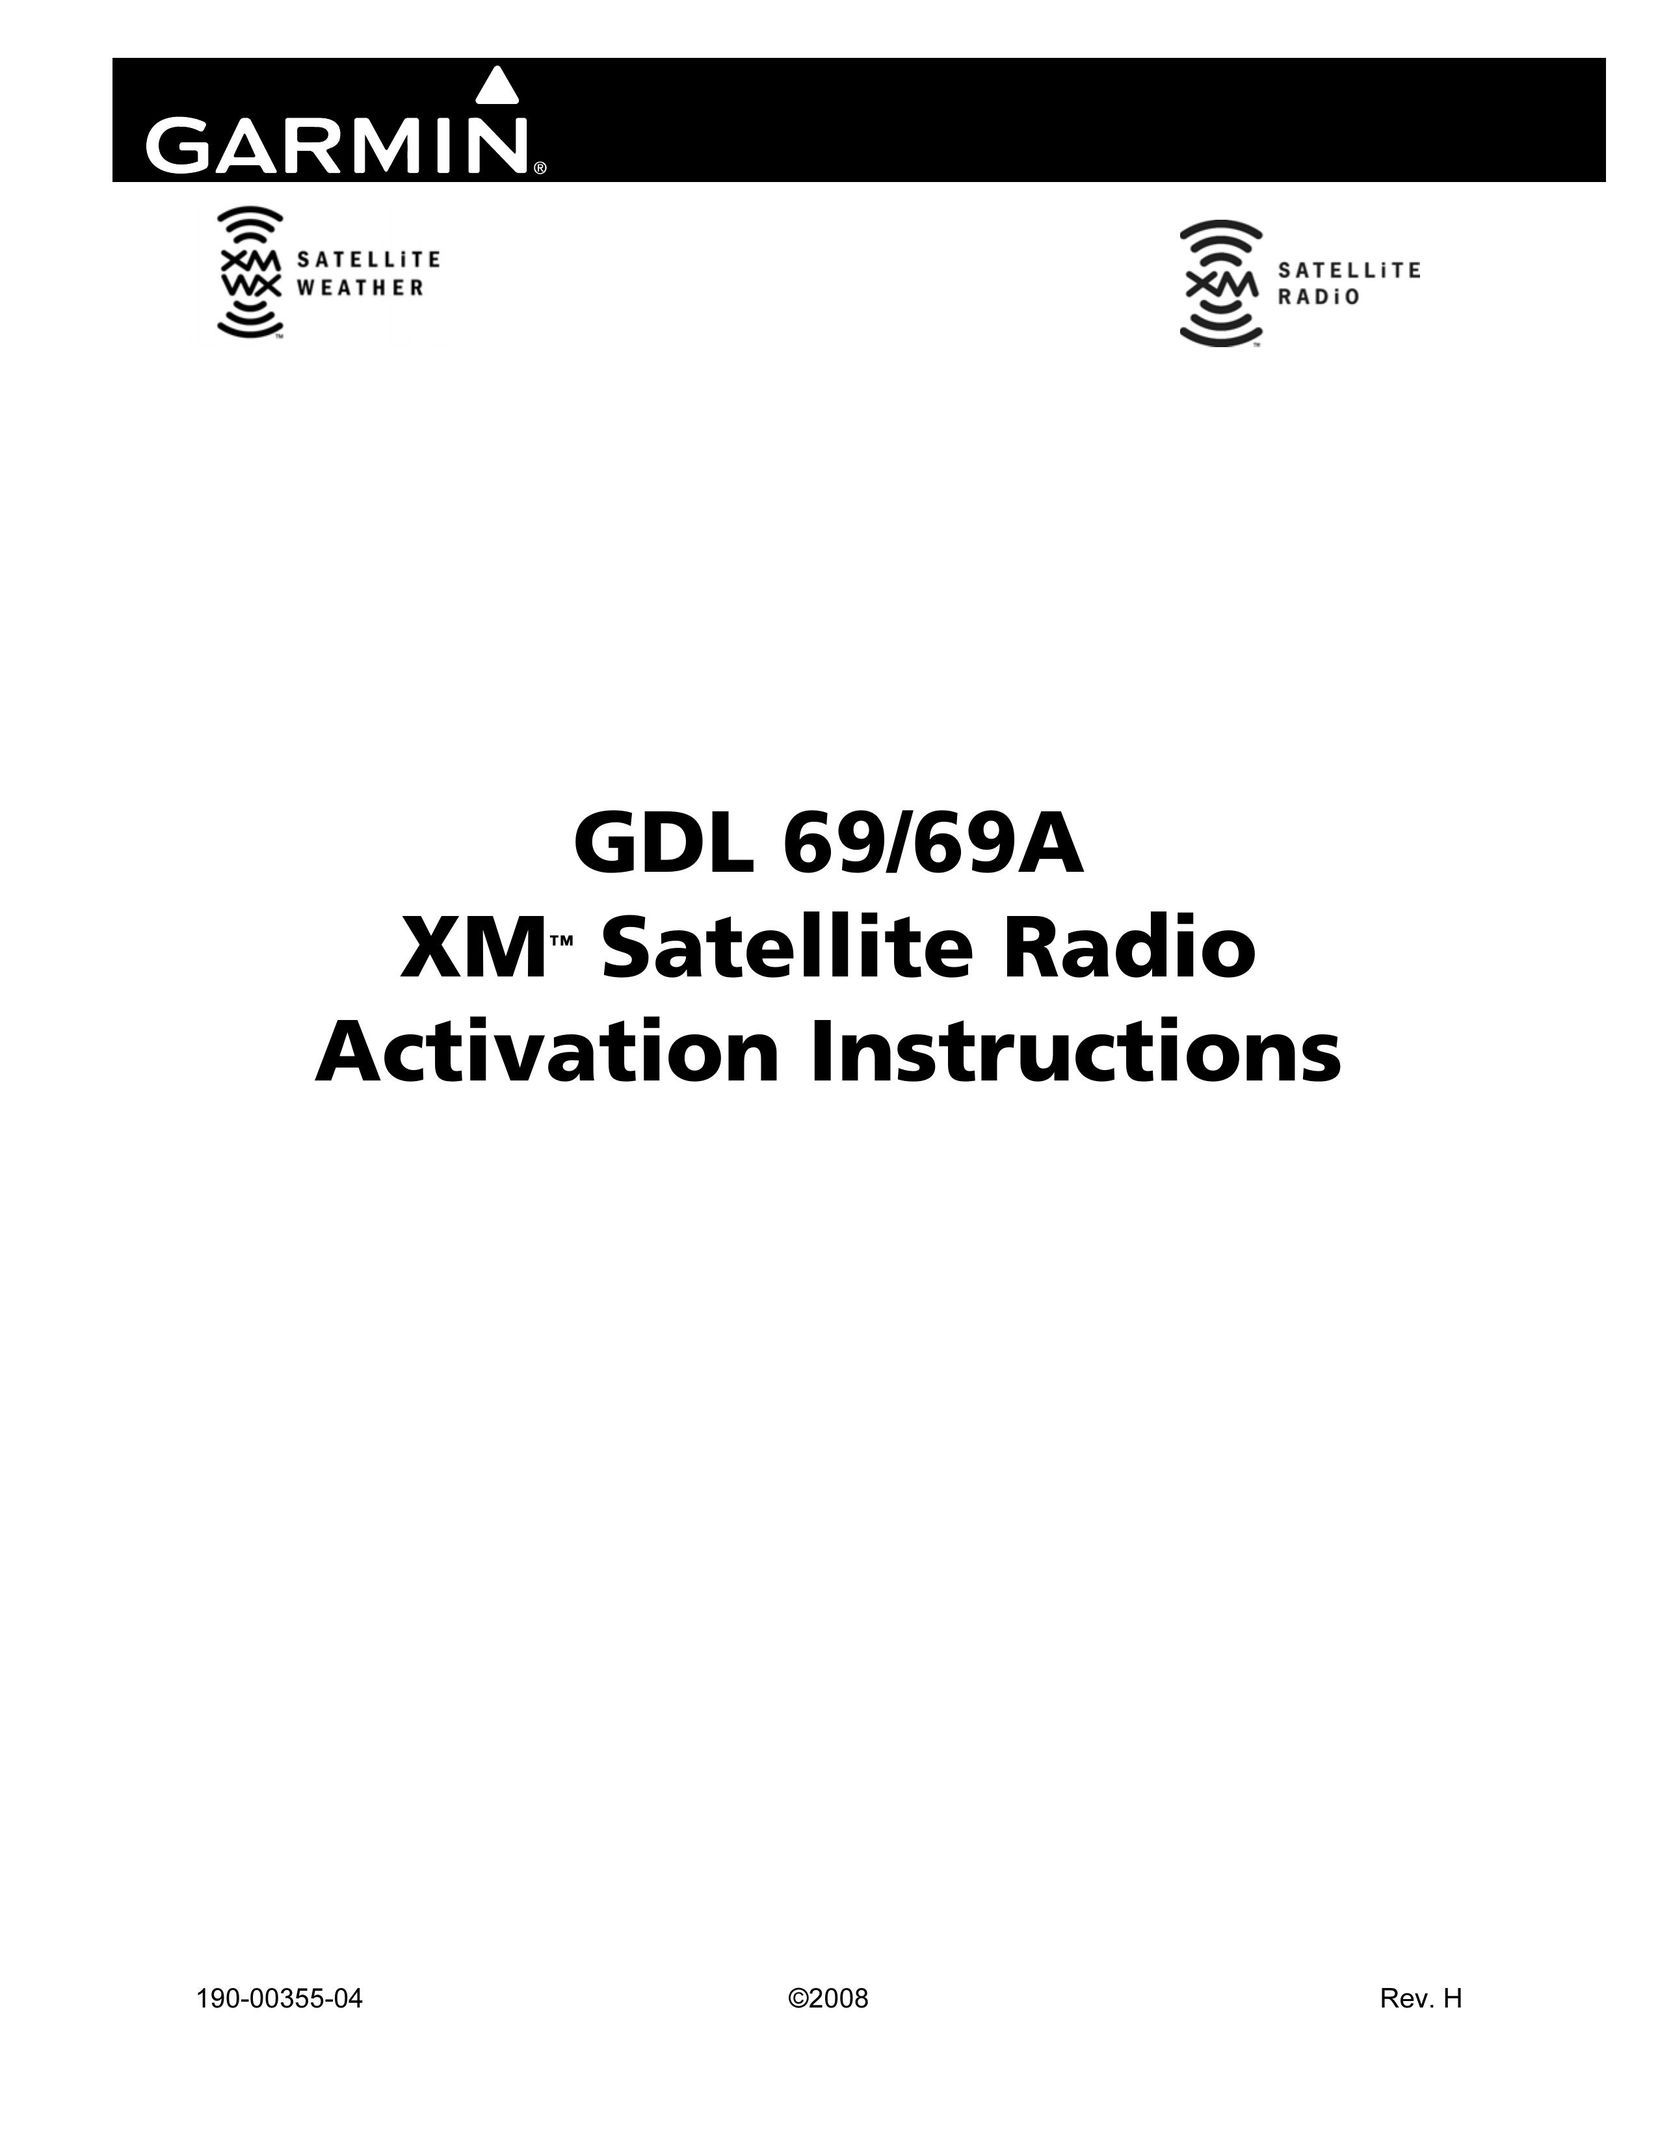 Garmin GDL 69 Satellite Radio User Manual